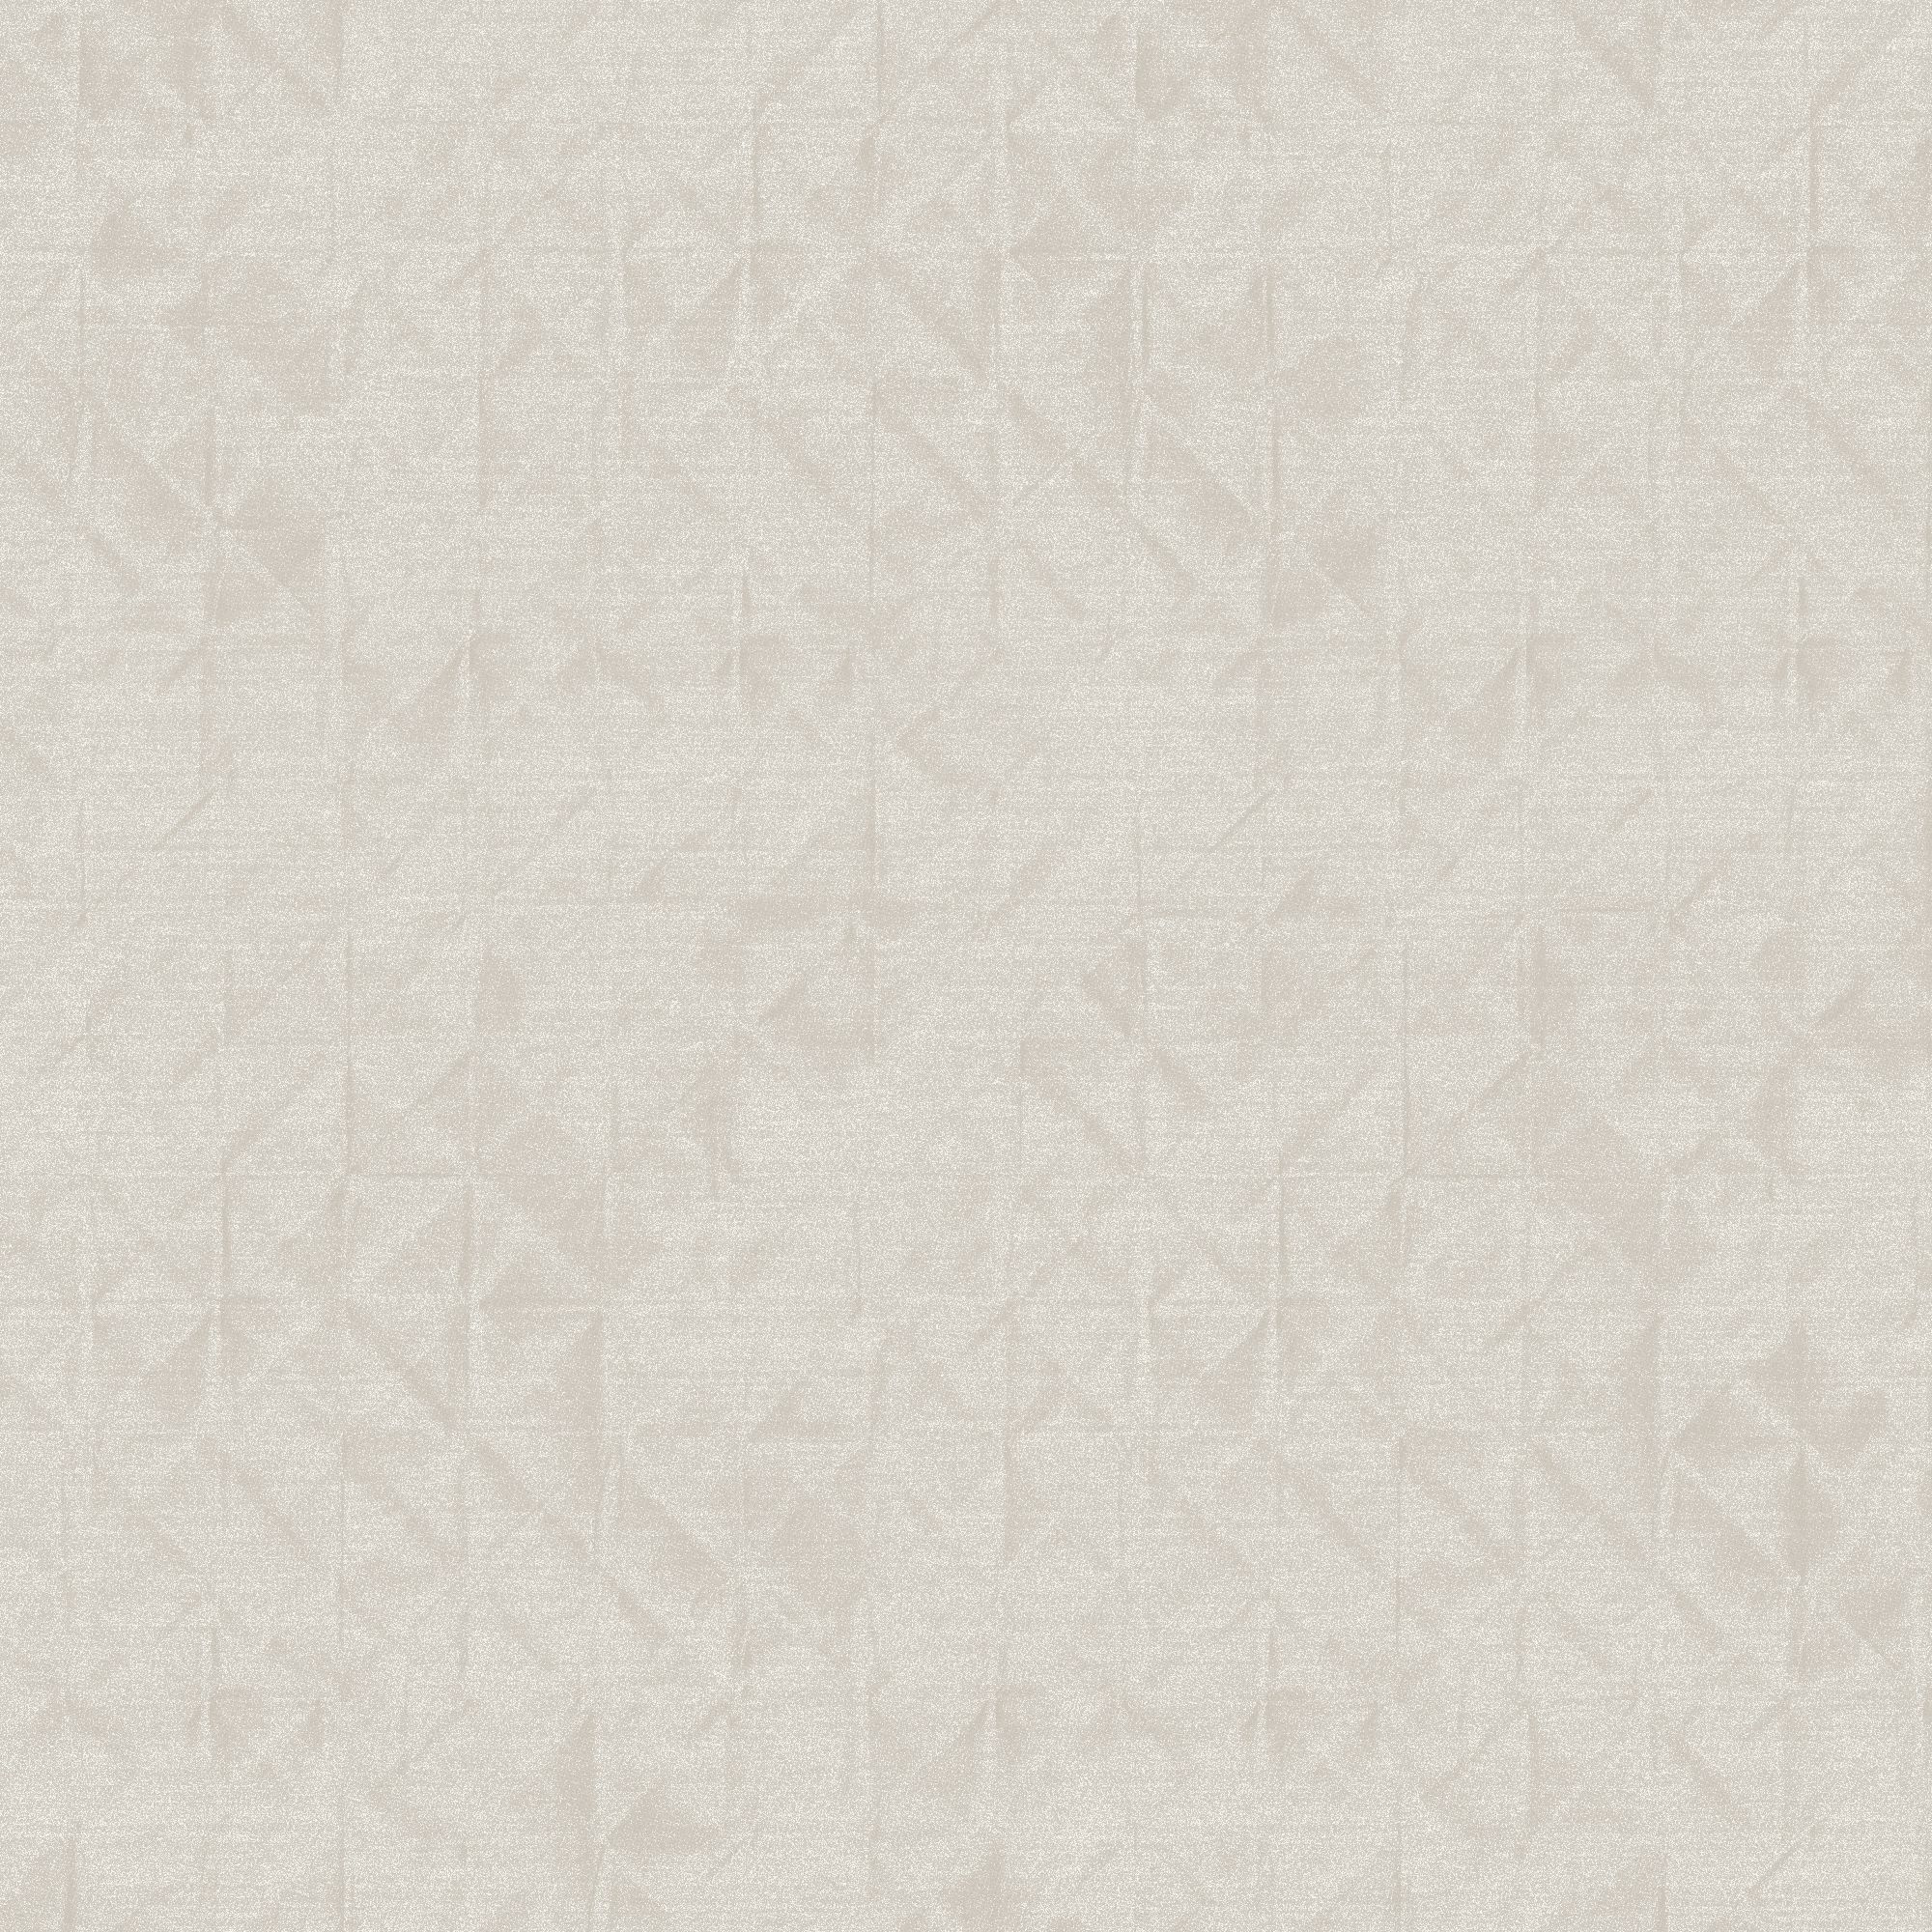 GoodHome Auve Light beige Origami art Textured Wallpaper Sample